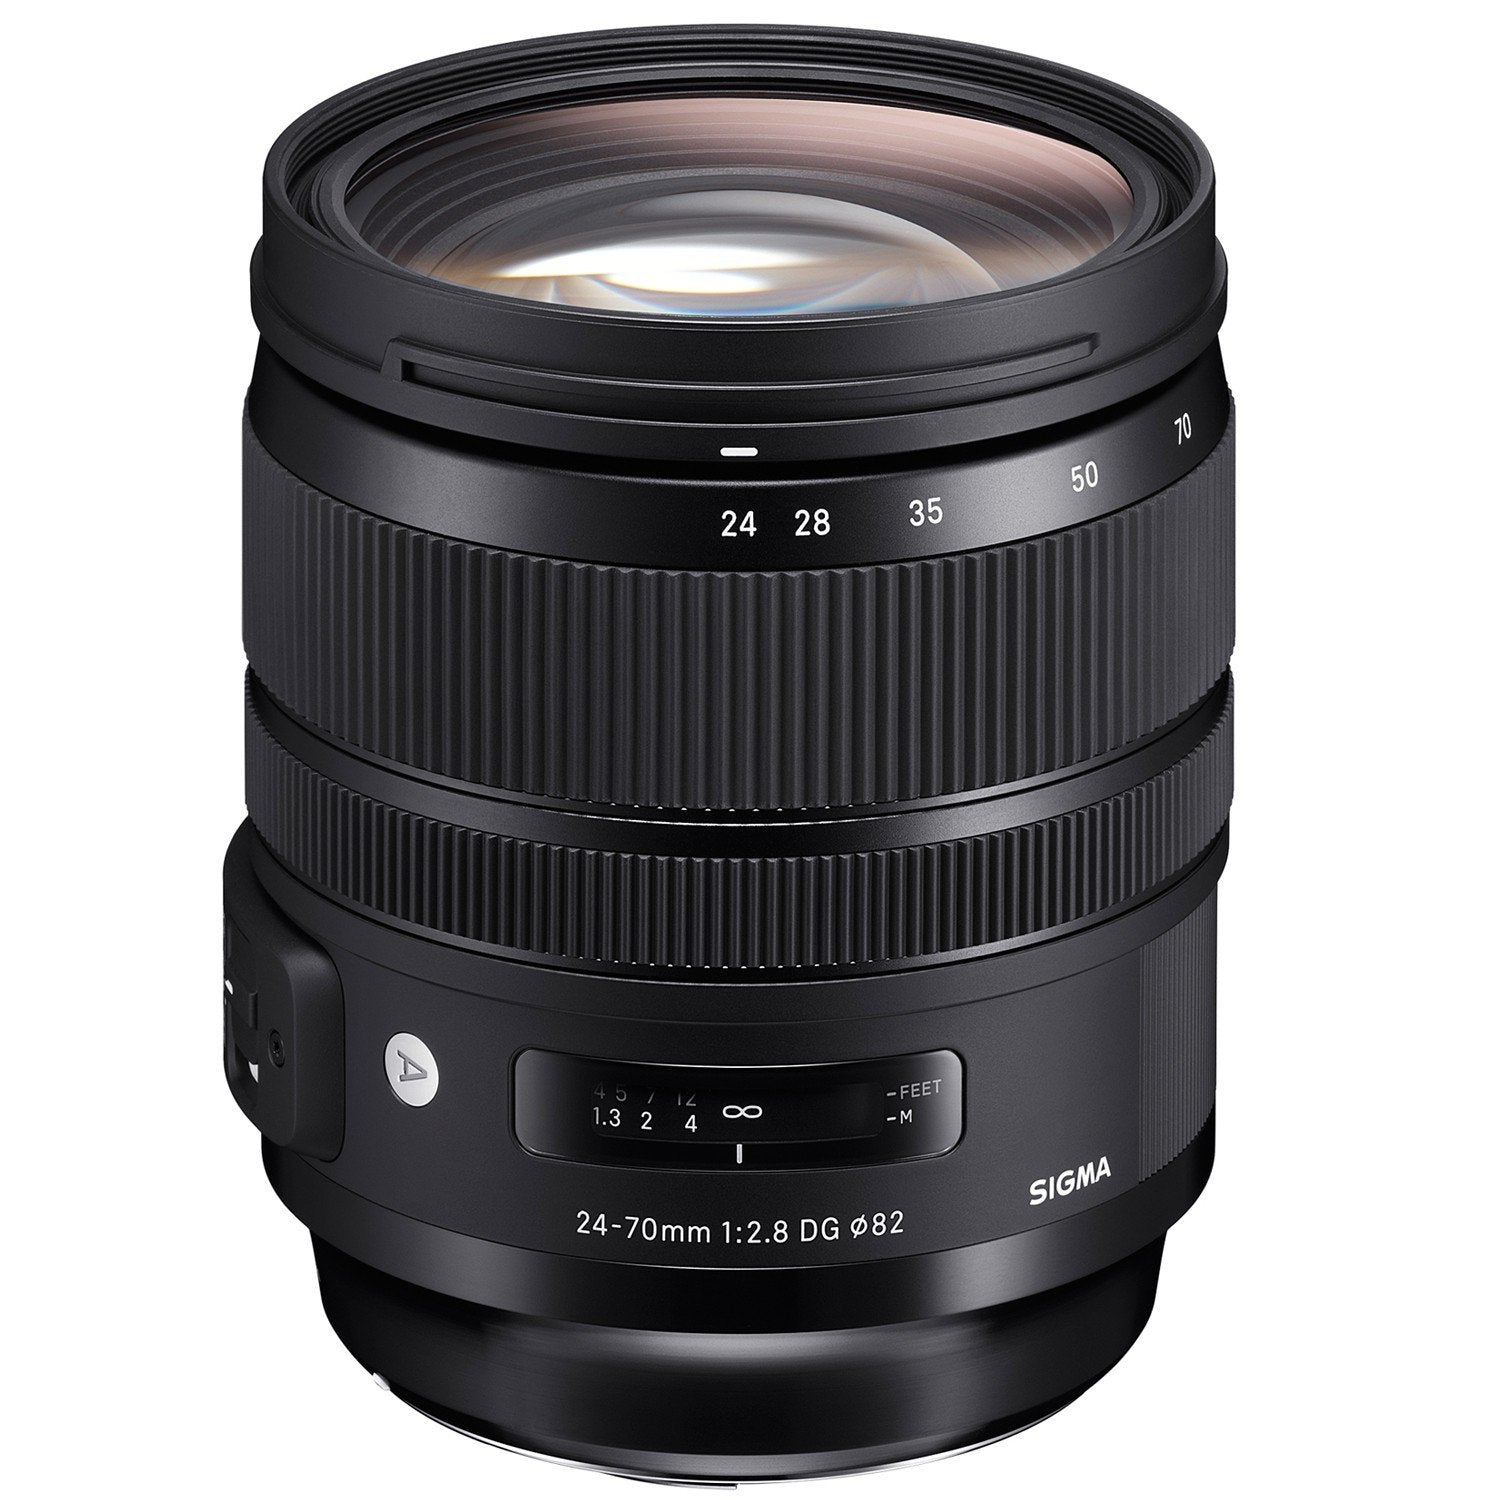 Nikon DSLR कैमरा के लिए सिग्मा 24-70mm f/2.8 DG OS HSM आर्ट लेंस-काला